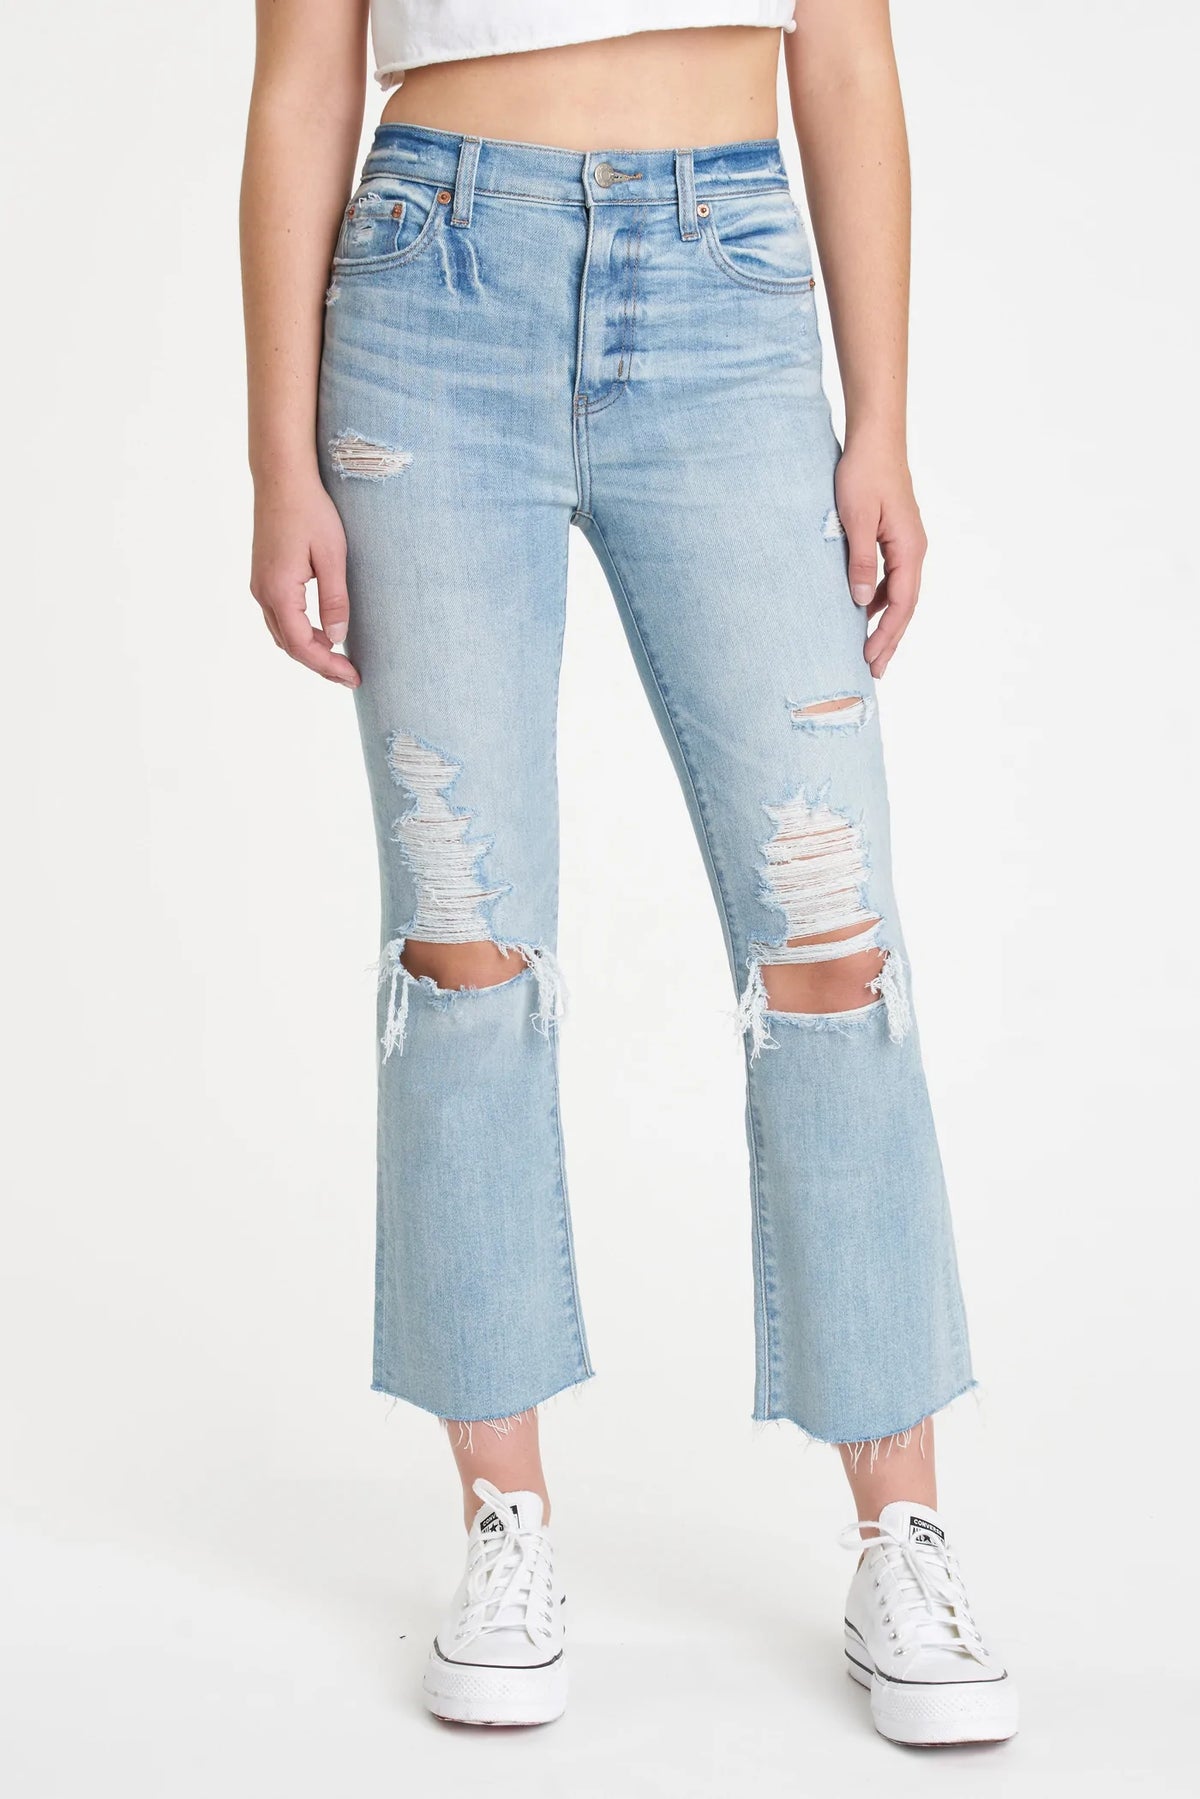 Daze Shy Girl Cropped Jeans